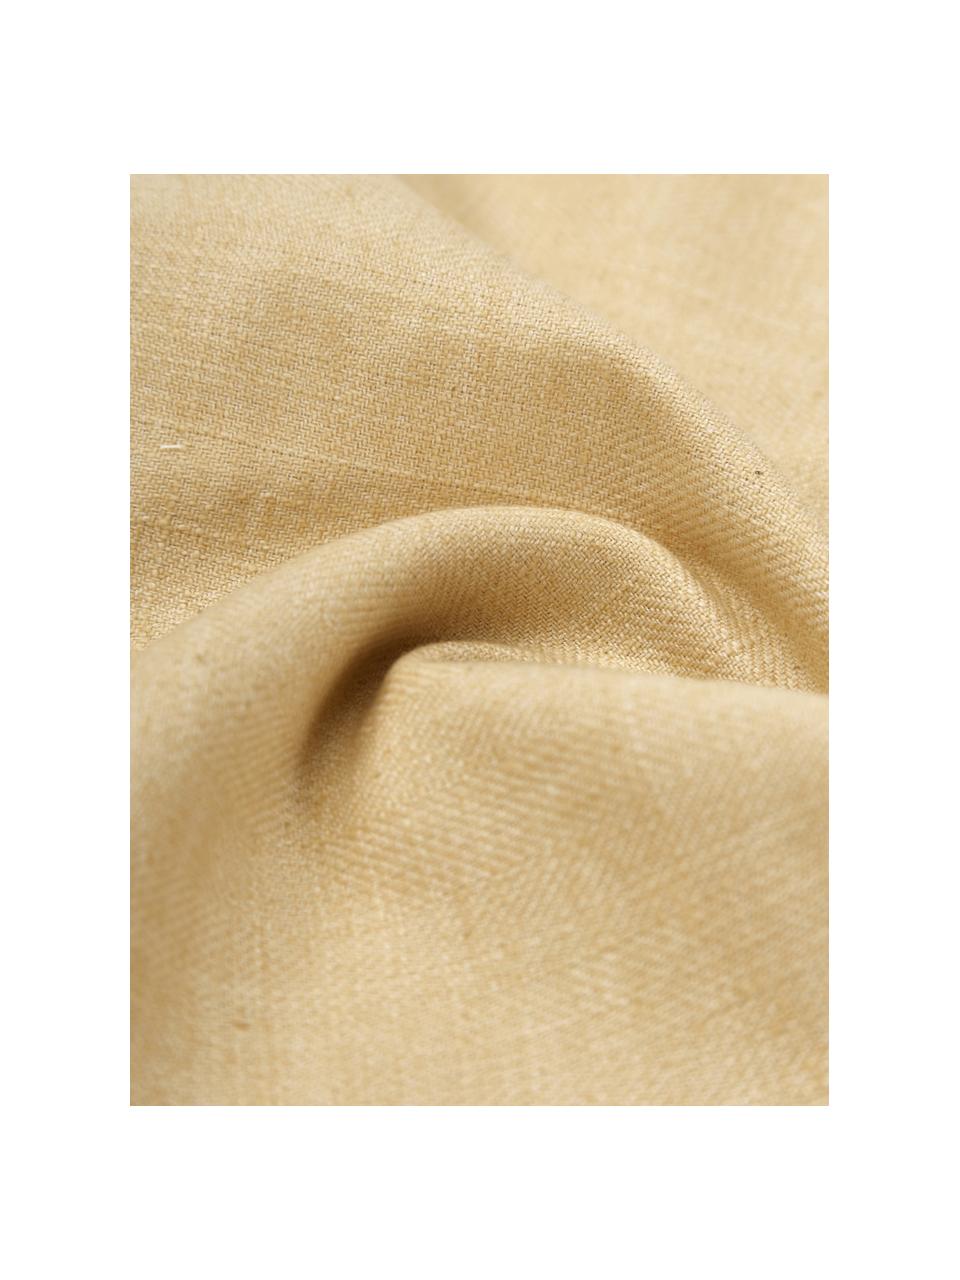 Kussenhoes Camille met franjes, 60% polyester, 25% katoen, 15% linnen, Lichtgeel, B 45 x L 45 cm